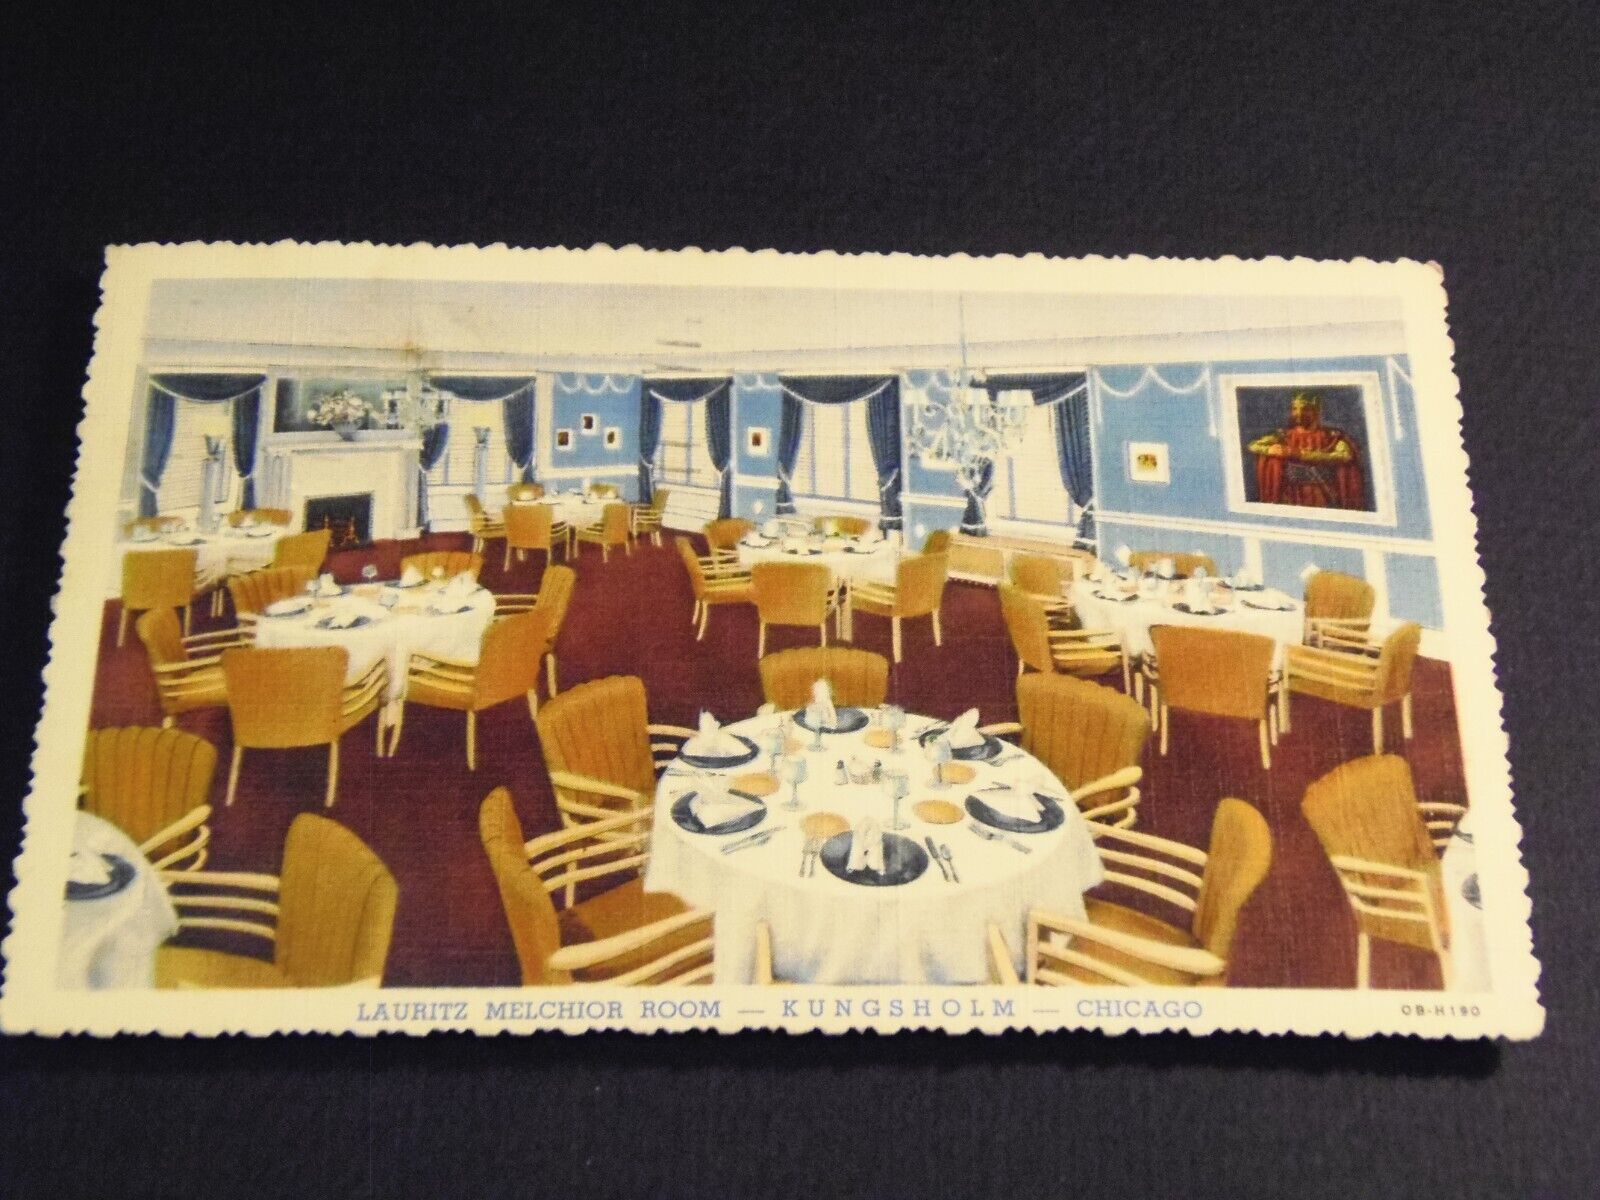 Lauritz Melchoir Room, Kungsholm, Chicago, Illinois Postcard